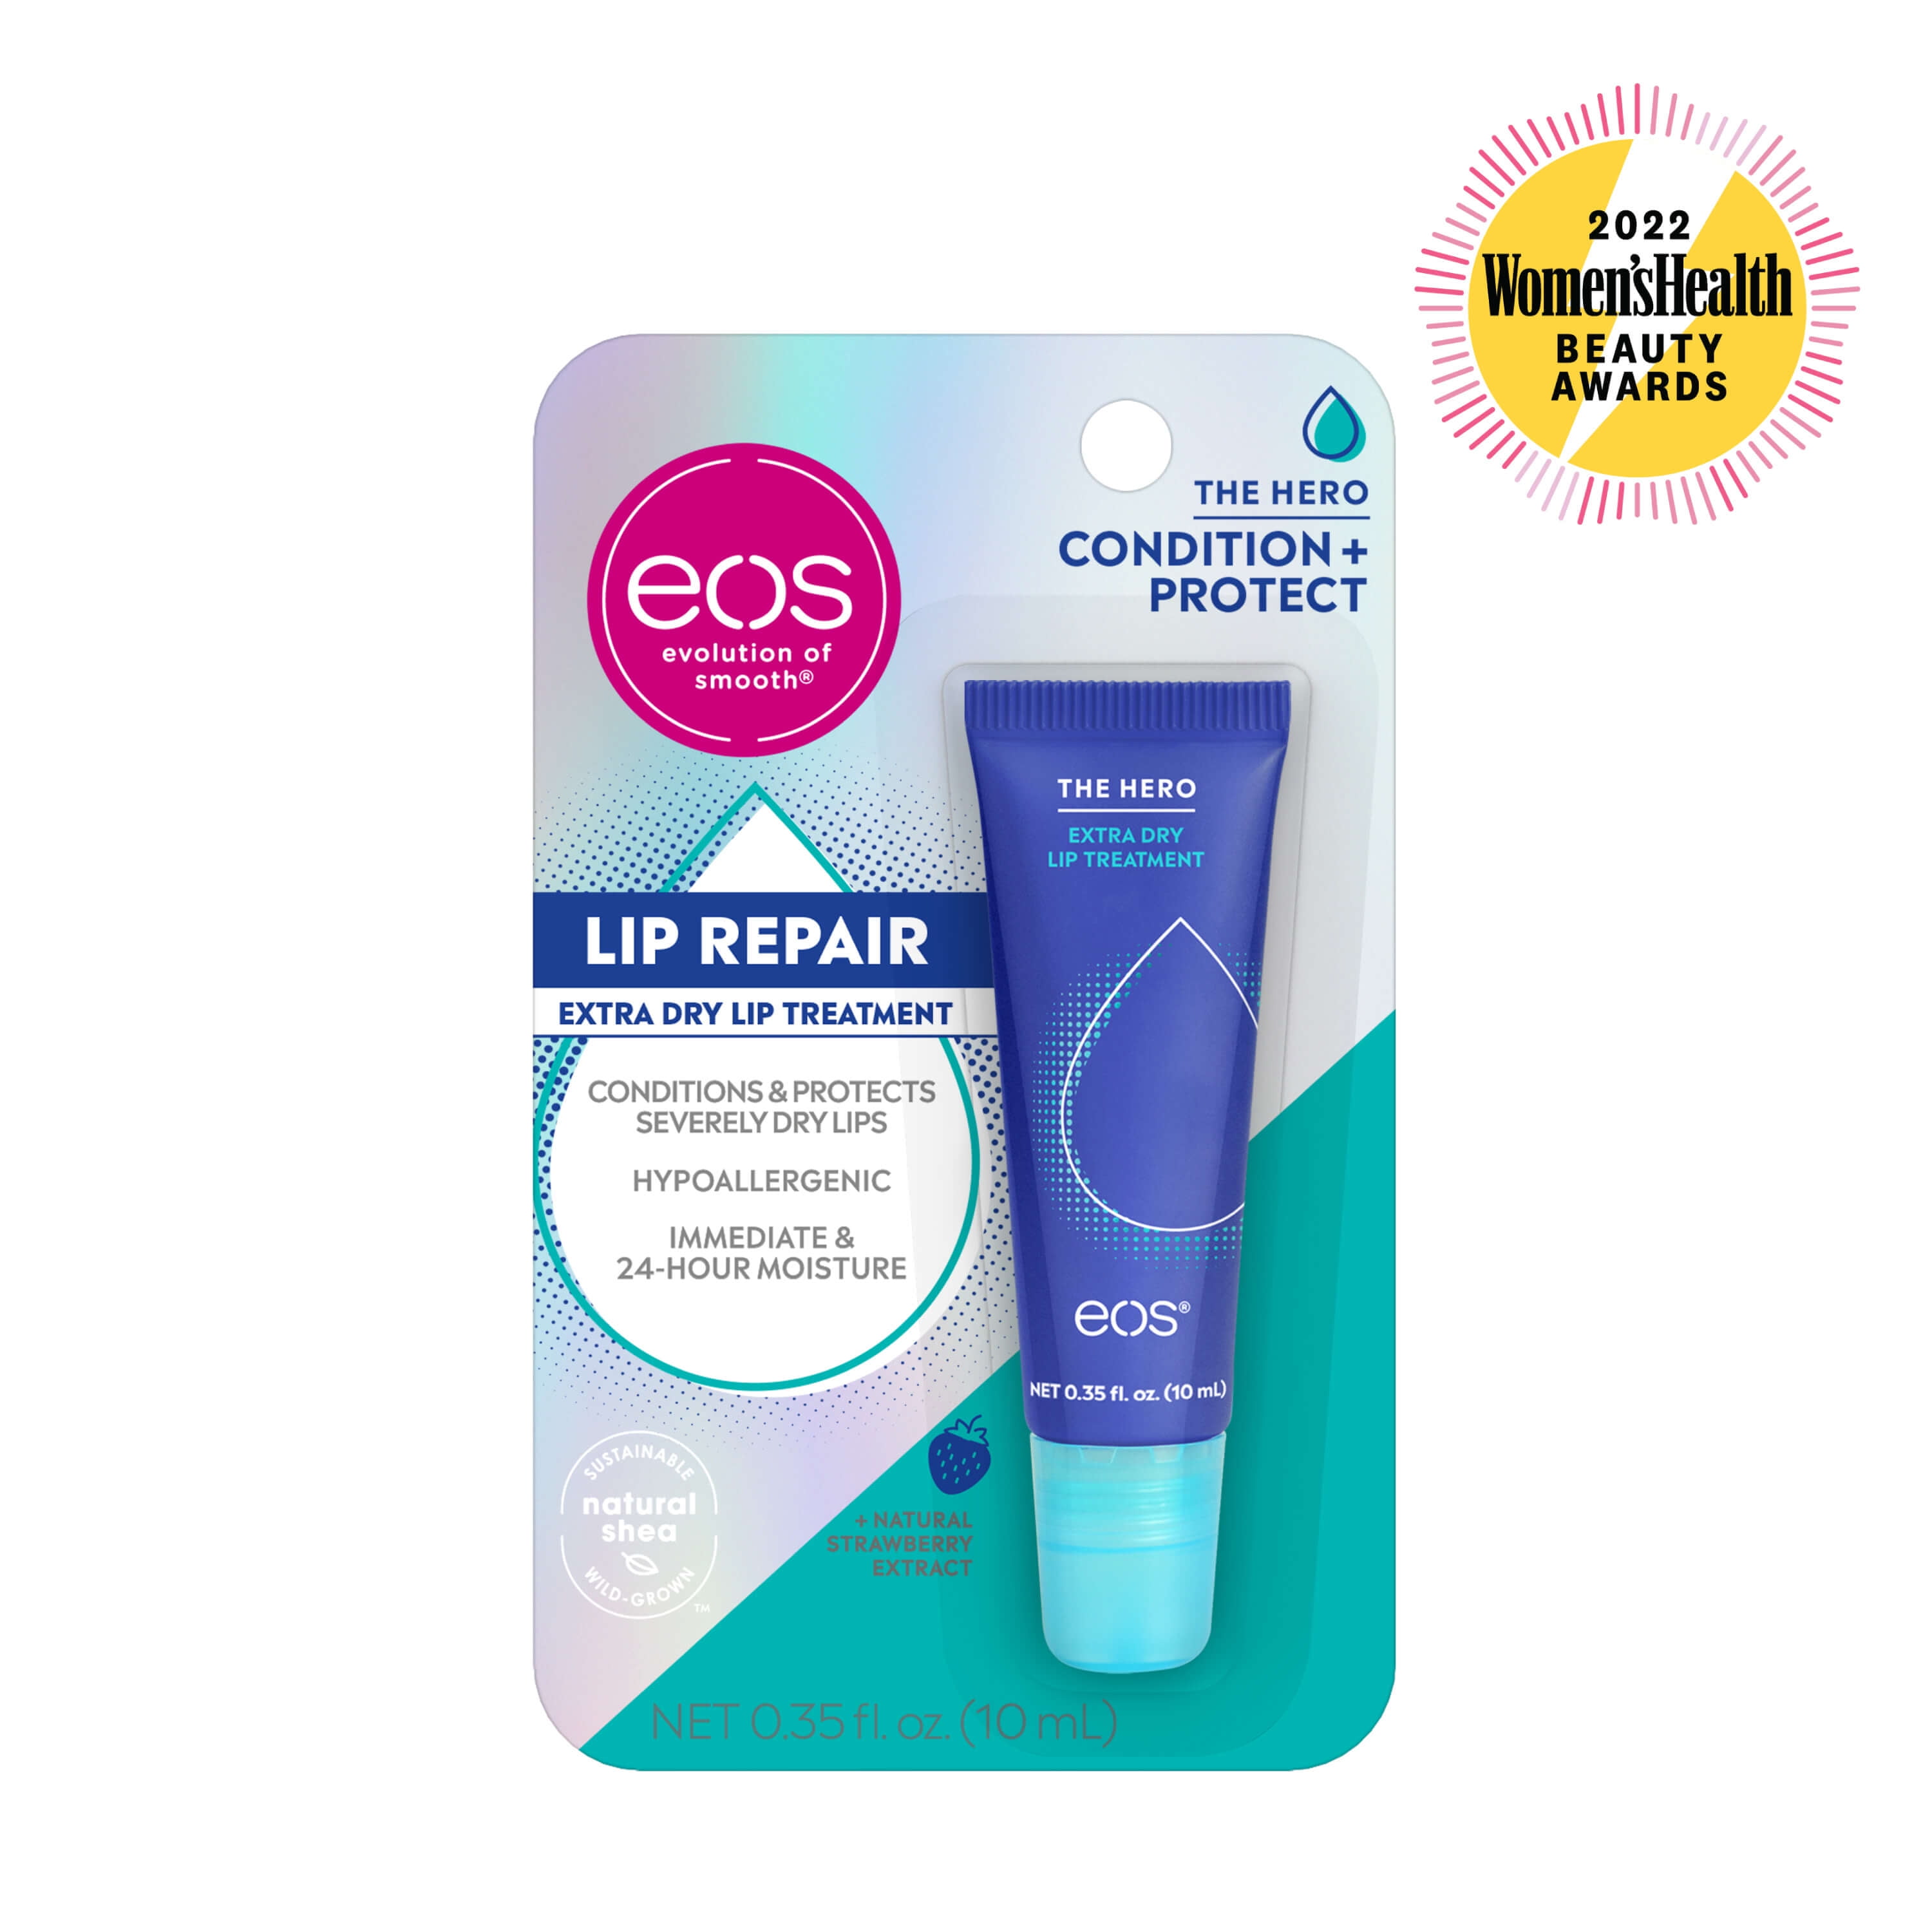 eos The Hero Extra Dry Lip Balm Treatment - 0.35 fl oz